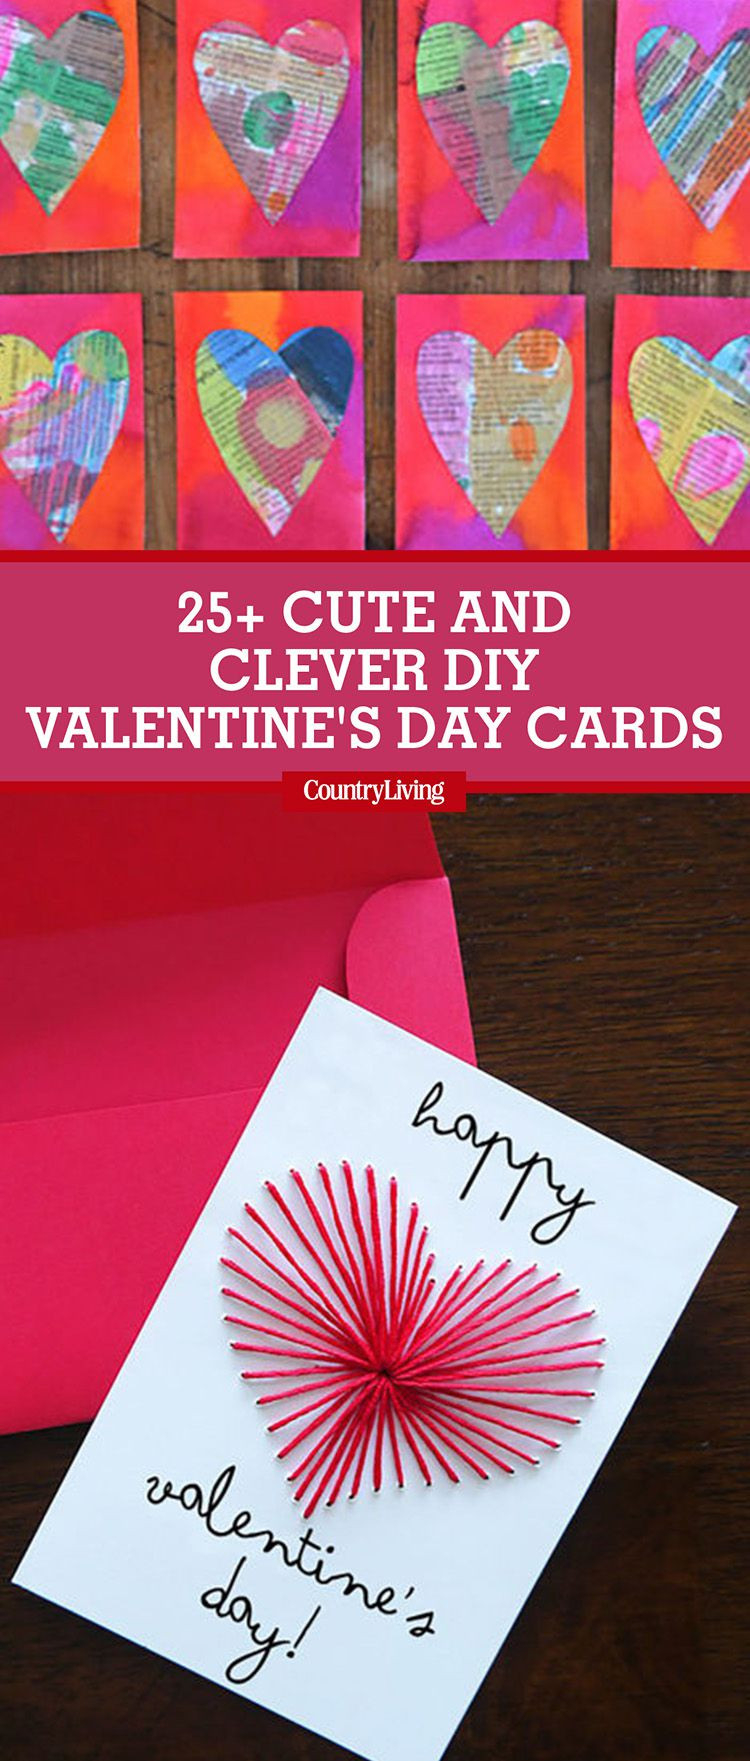 Handmade Birthday Card Ideas For Boyfriend Handmade Birthday Card Ideas For Boyfriend Awesome Love Love Love